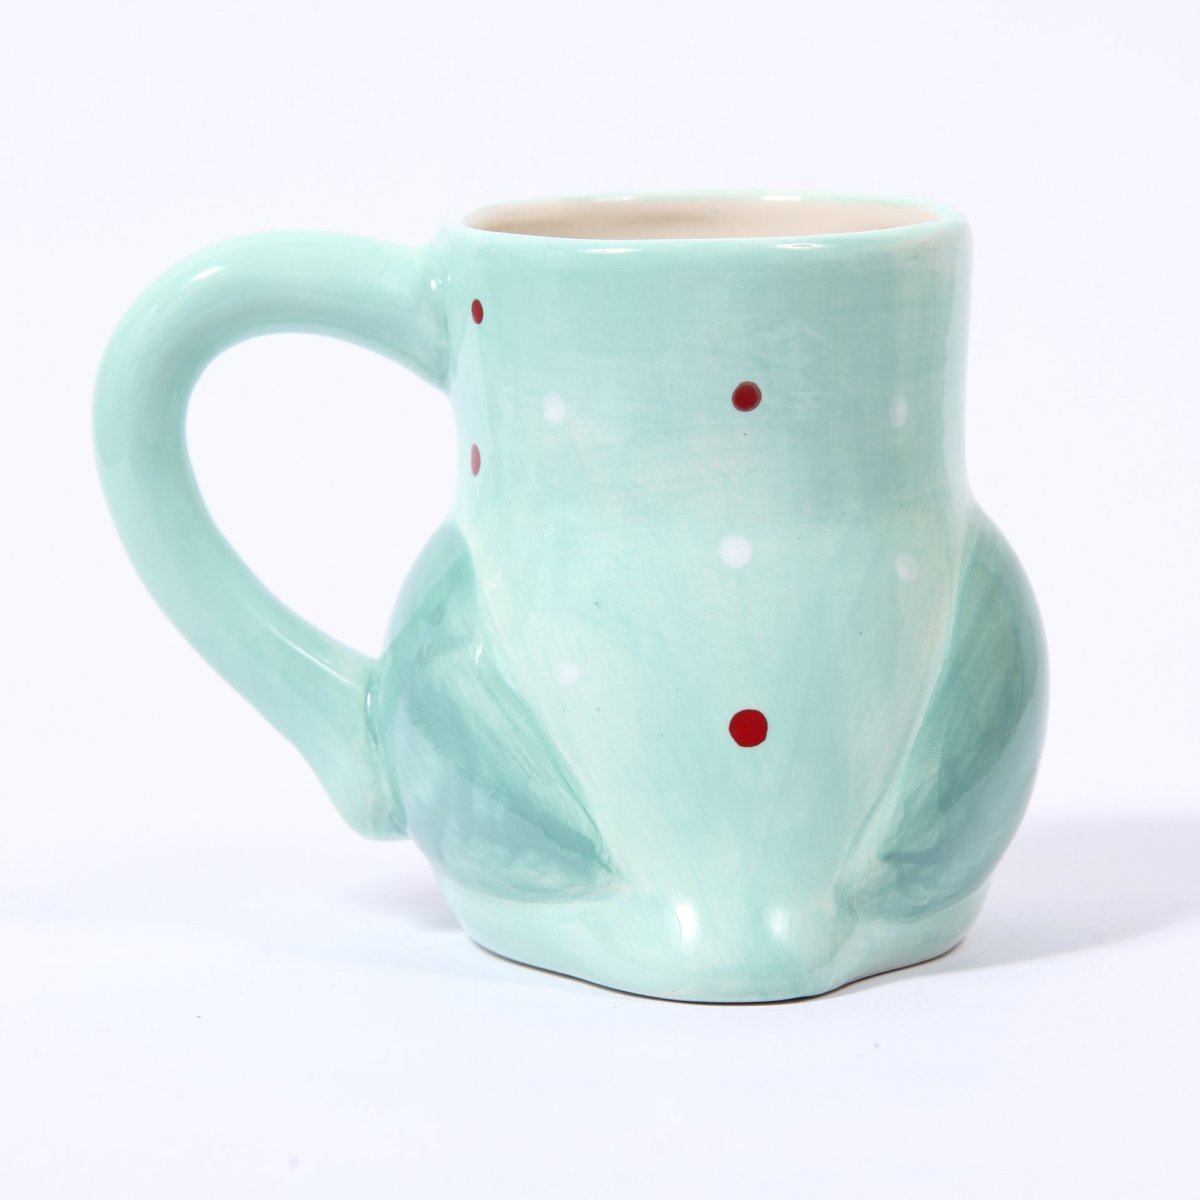 Blue Ceramic Polka Dot Owl Mug - Mystic Moments UK